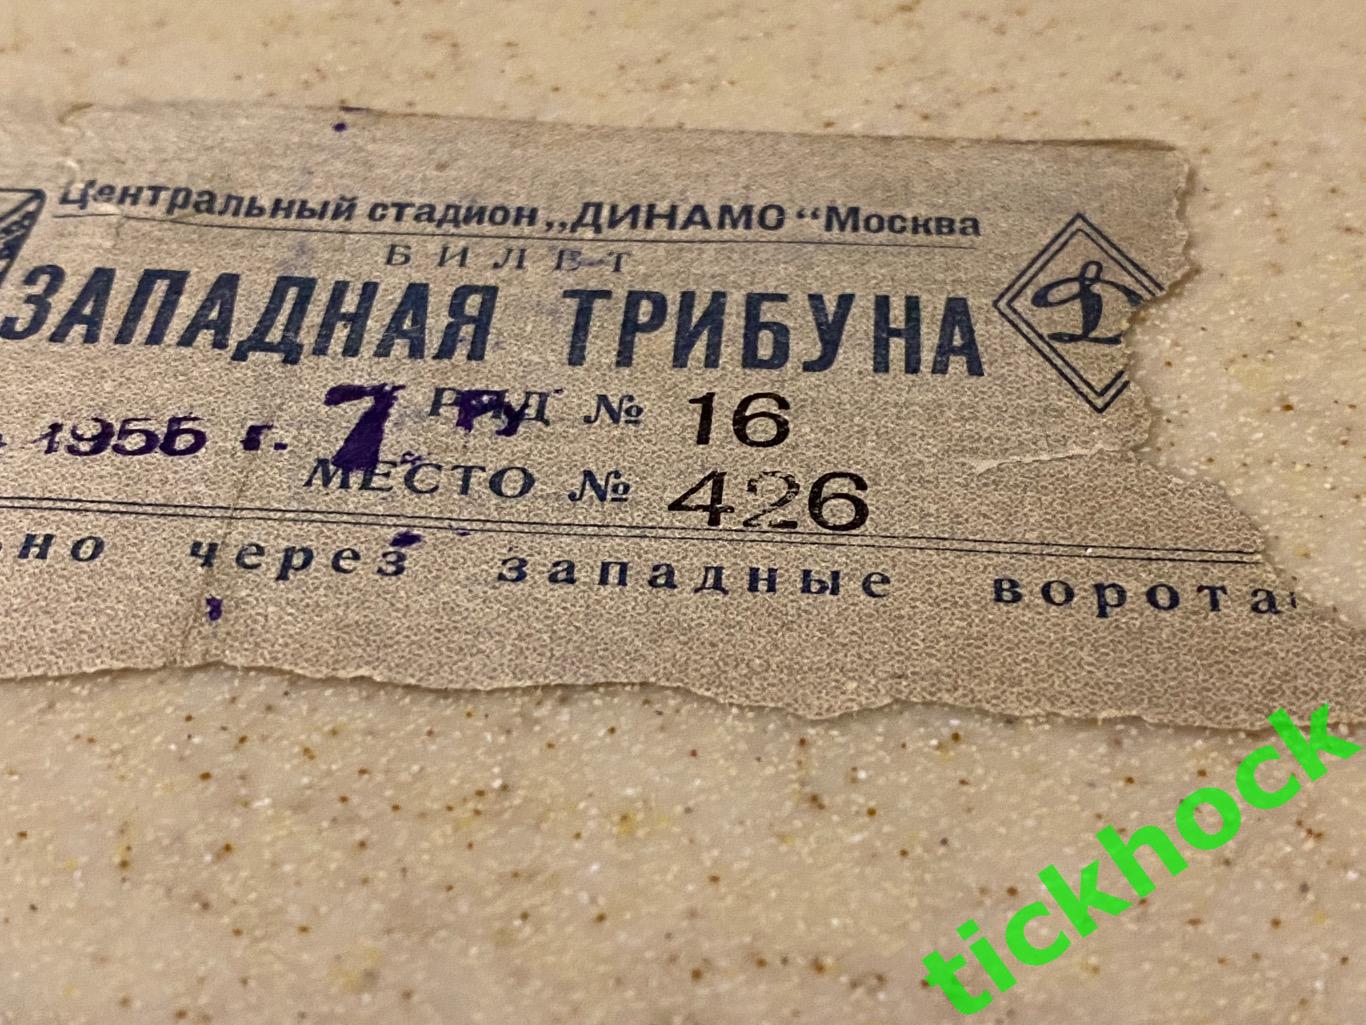 Спартак Москва - Торпедо Москва 30.08.1955-- билет -- Западная трибуна 1